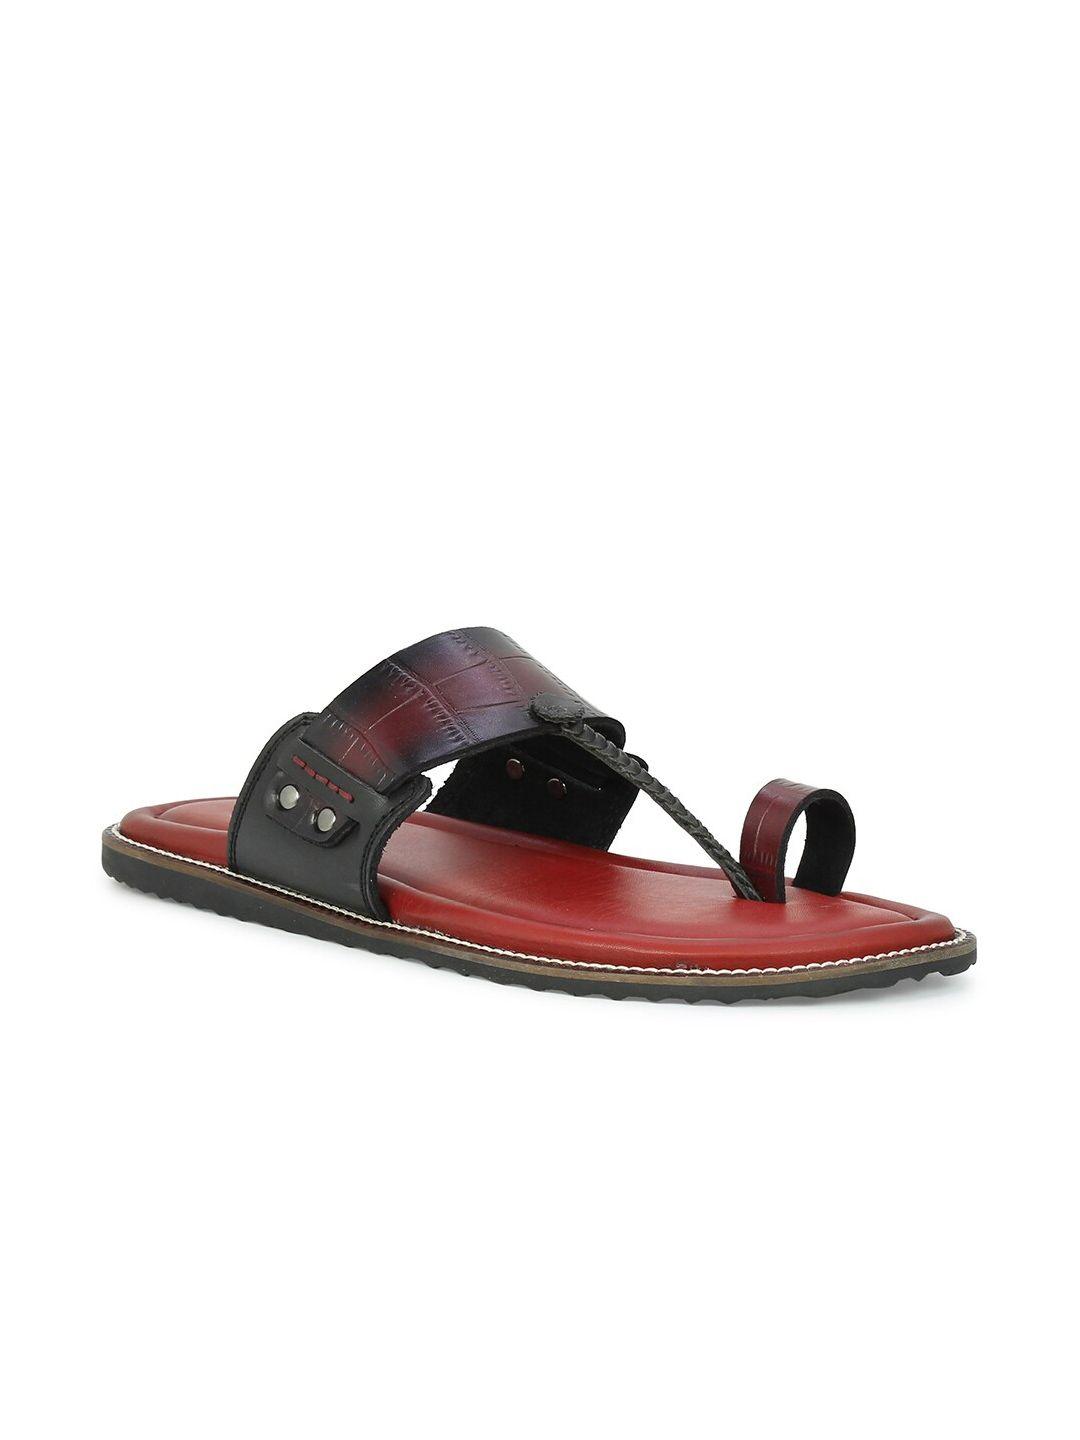 privo men red & black leather comfort sandals